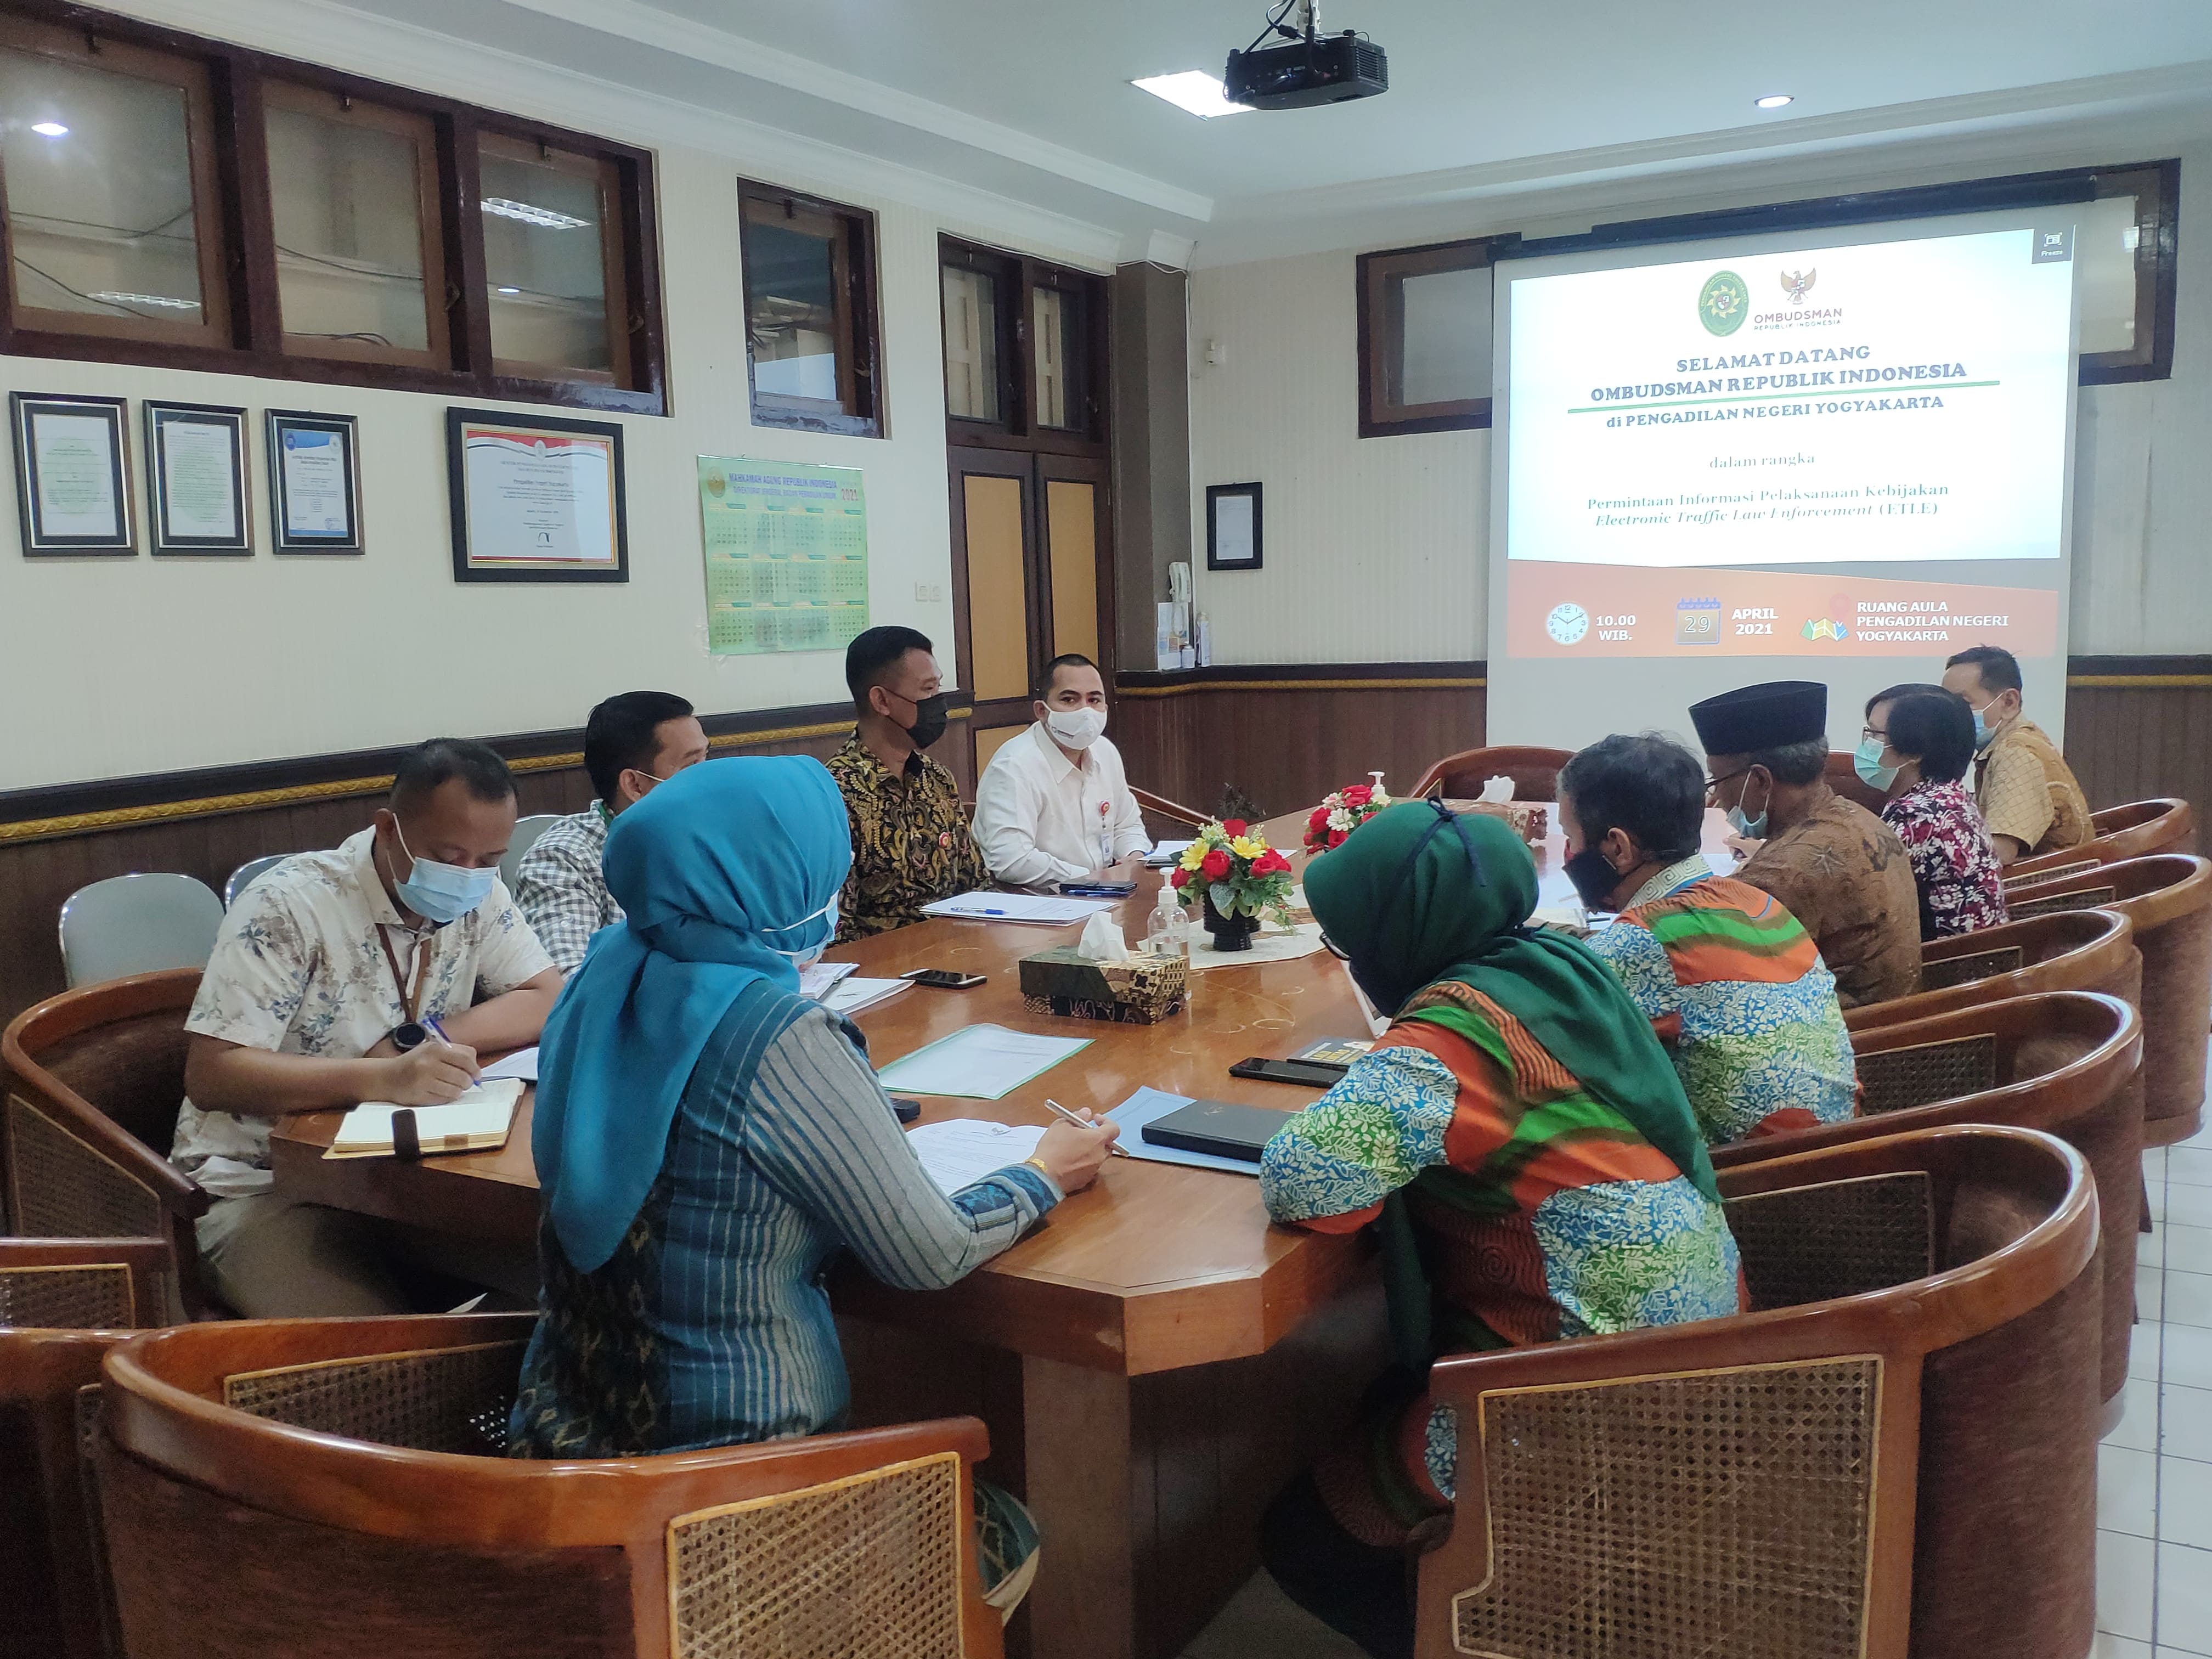 Kunjungan Ombudsman Republik Indonesia ke Pengadilan Negeri Yogyakarta